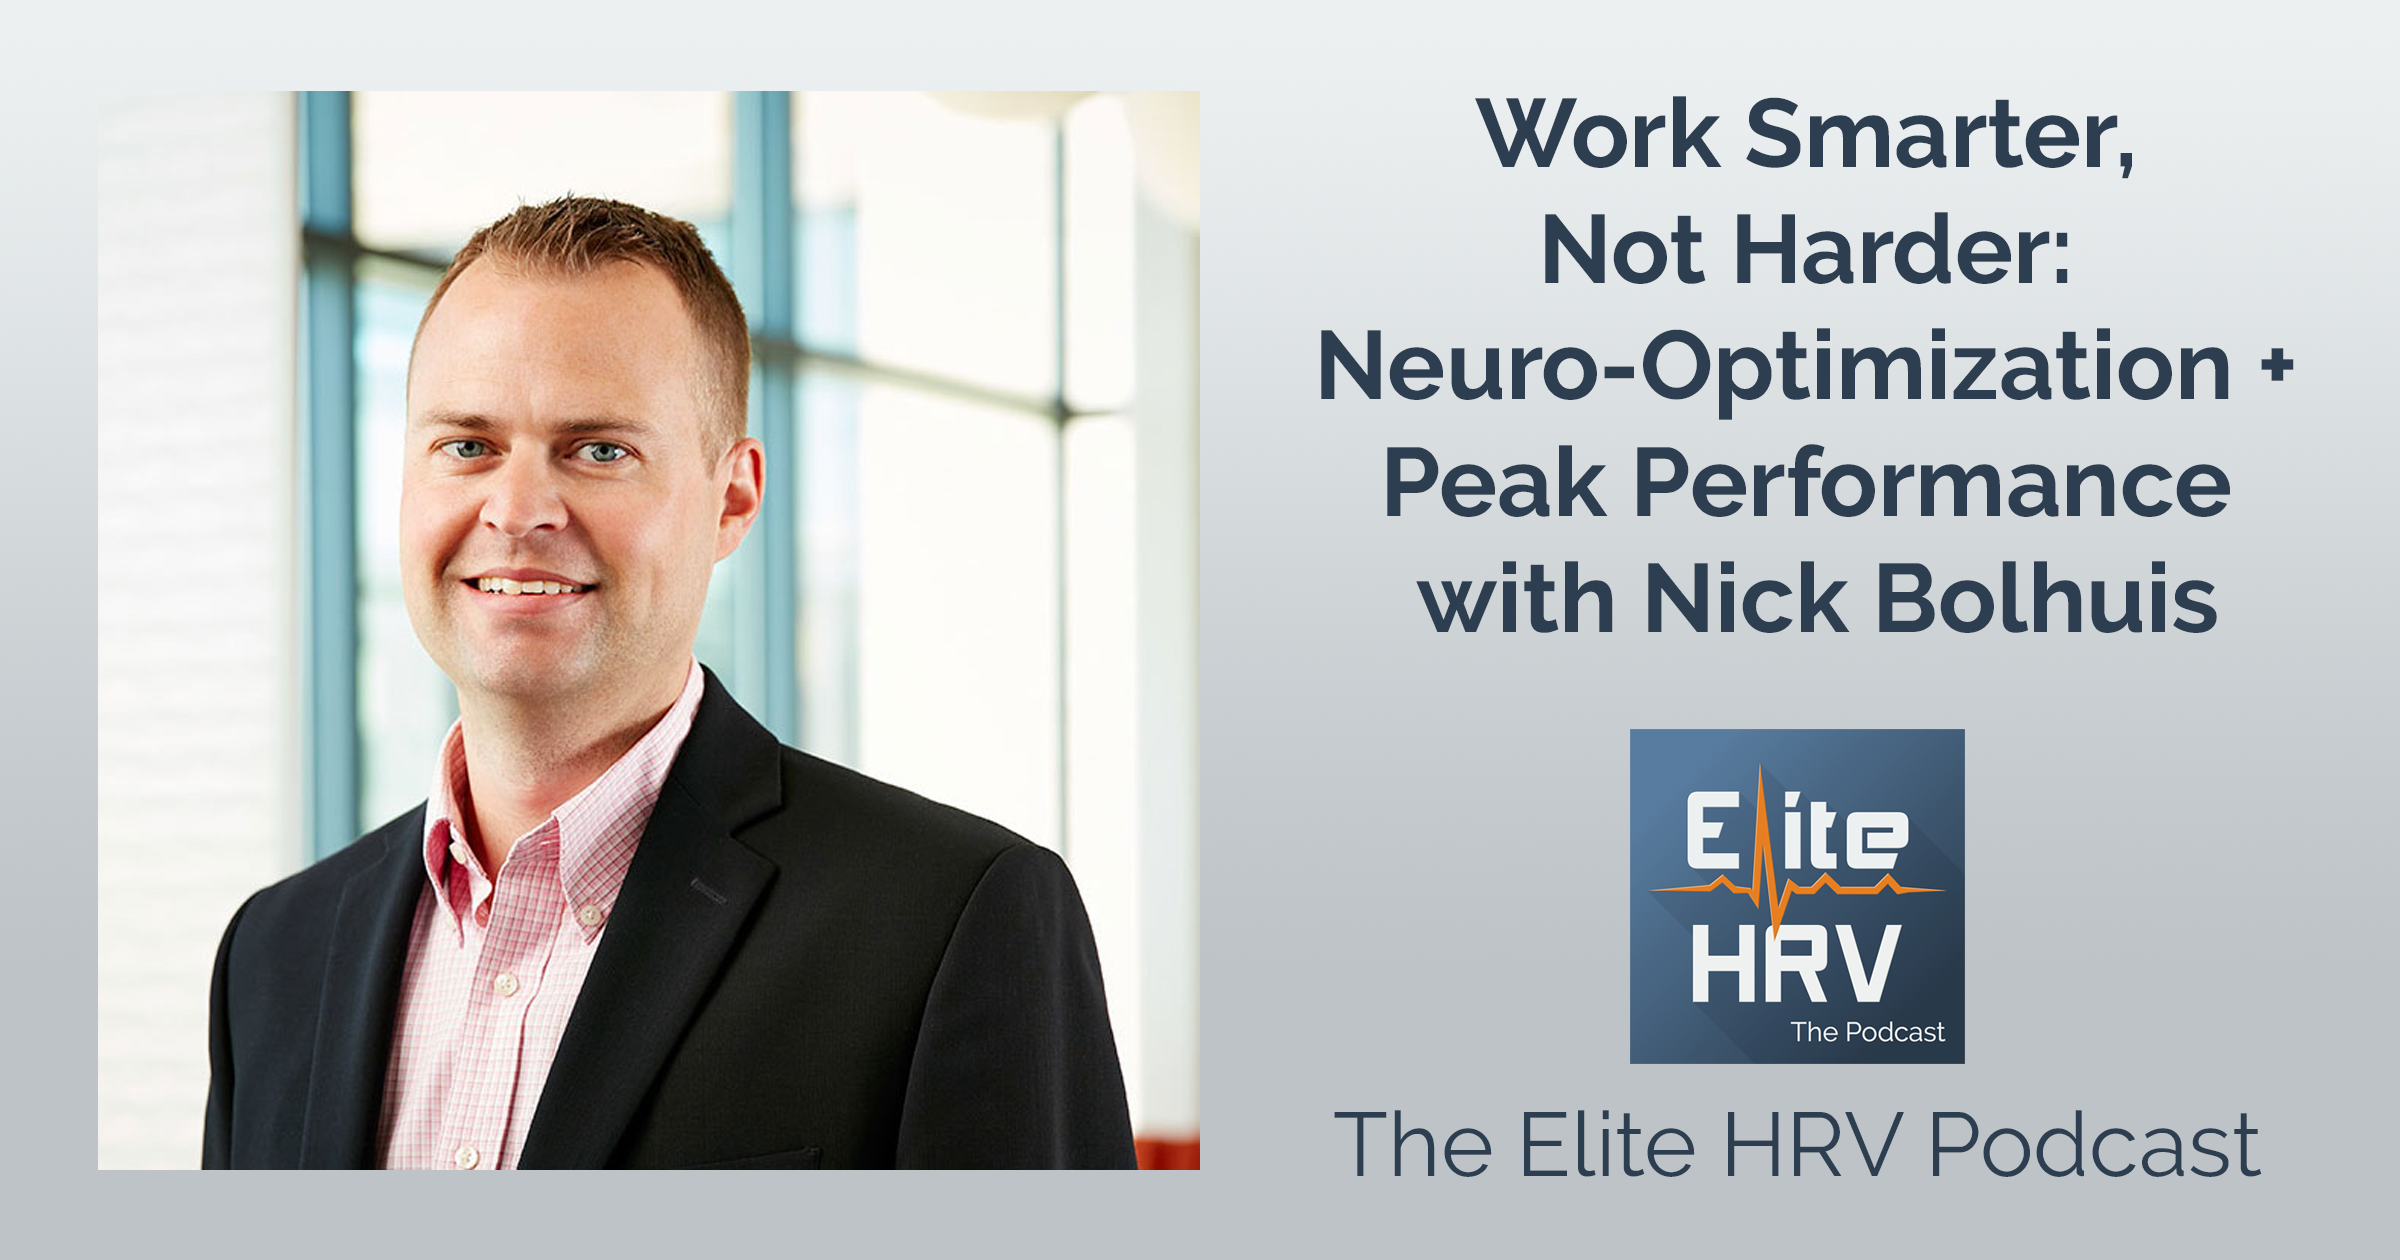 Work Smarter, Not Harder: Neuro-Optimization + Peak Performance with Nick Bolhuis